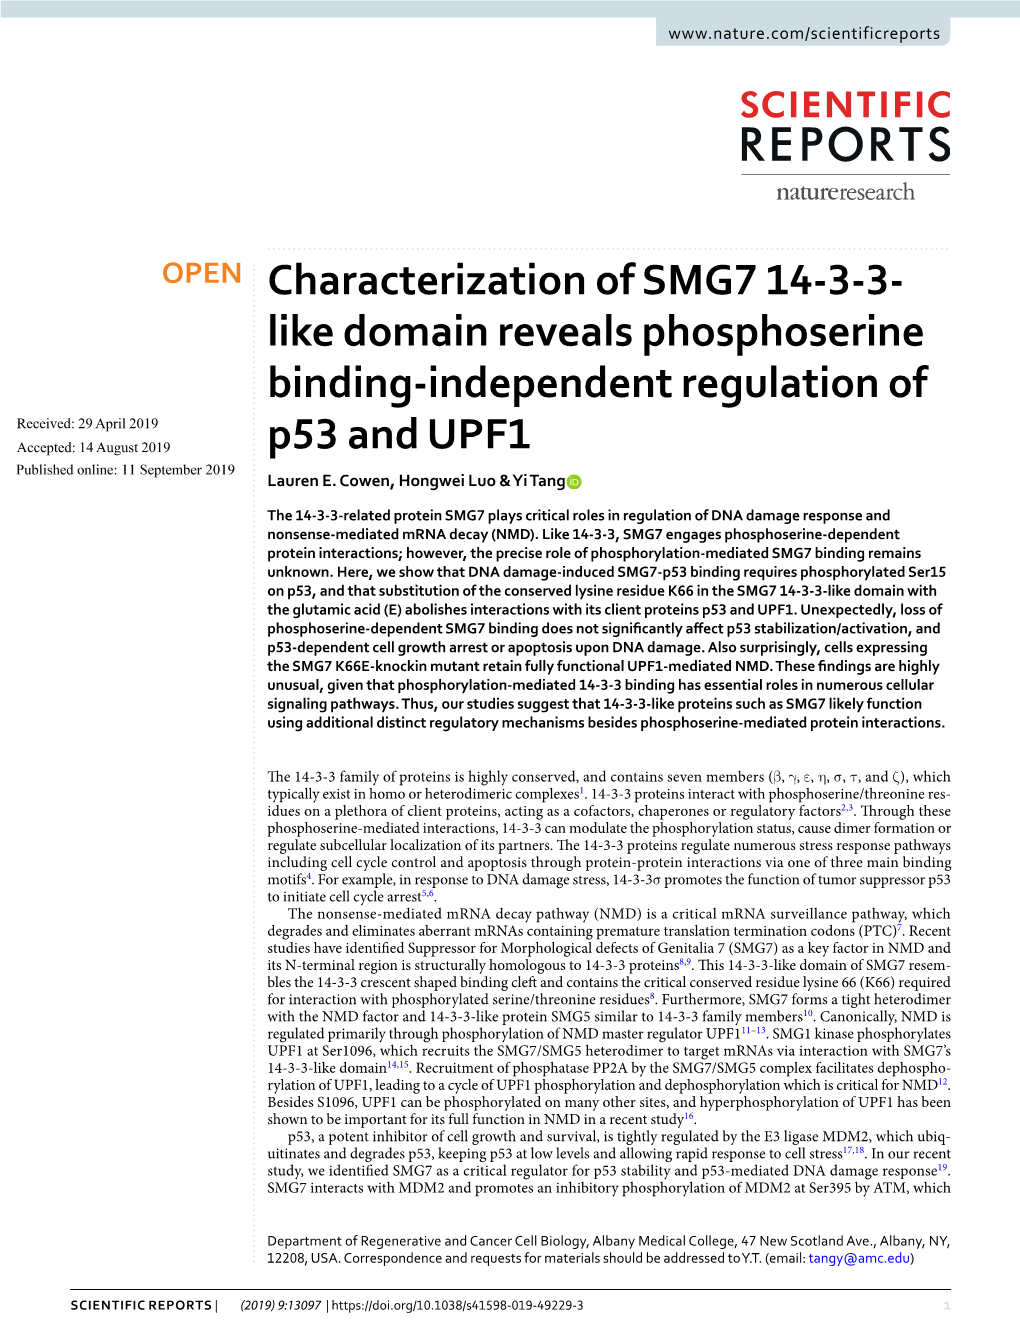 Characterization of SMG7 14-3-3-Like Domain Reveals Phosphoserine